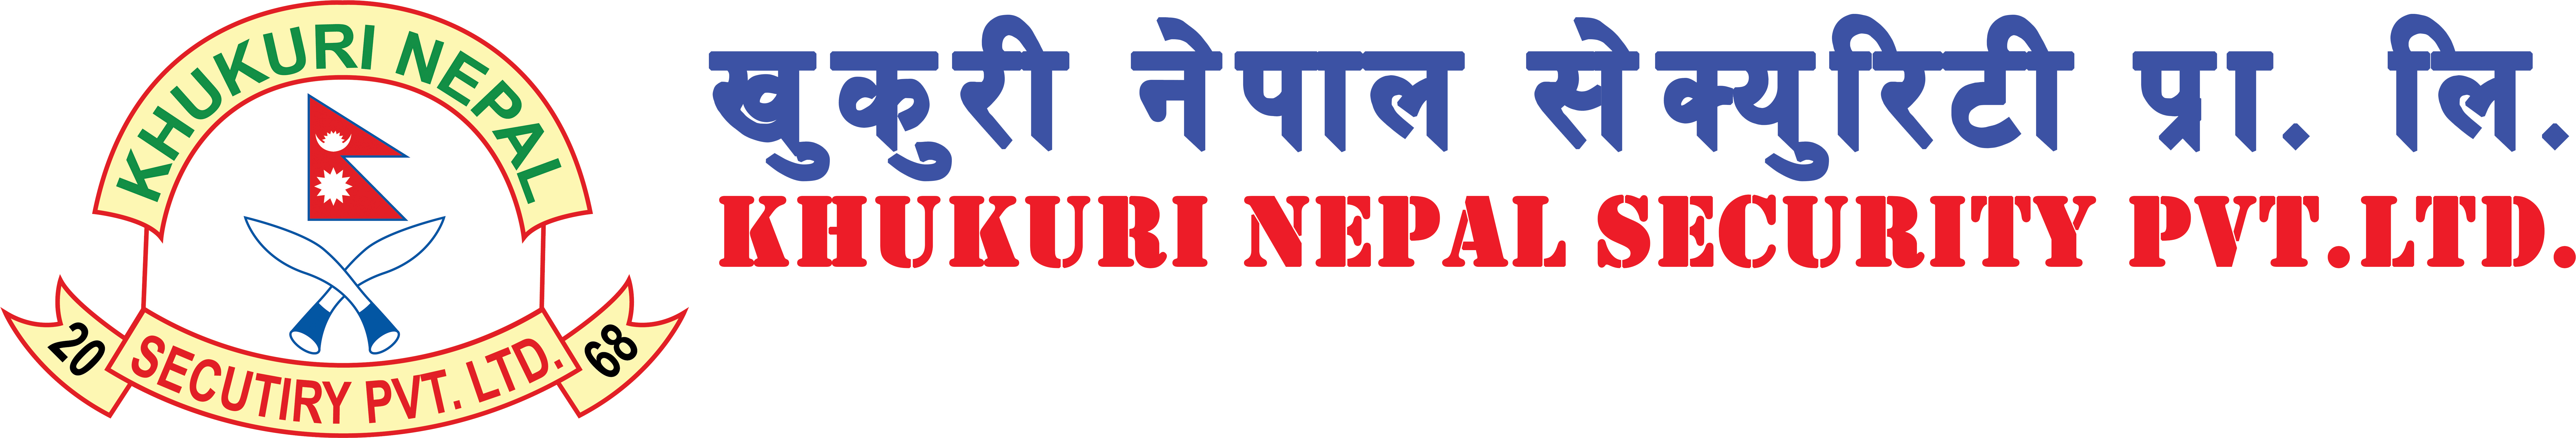 Khukuri Nepal Security Pvt Ltd No1 Security company in Nepal